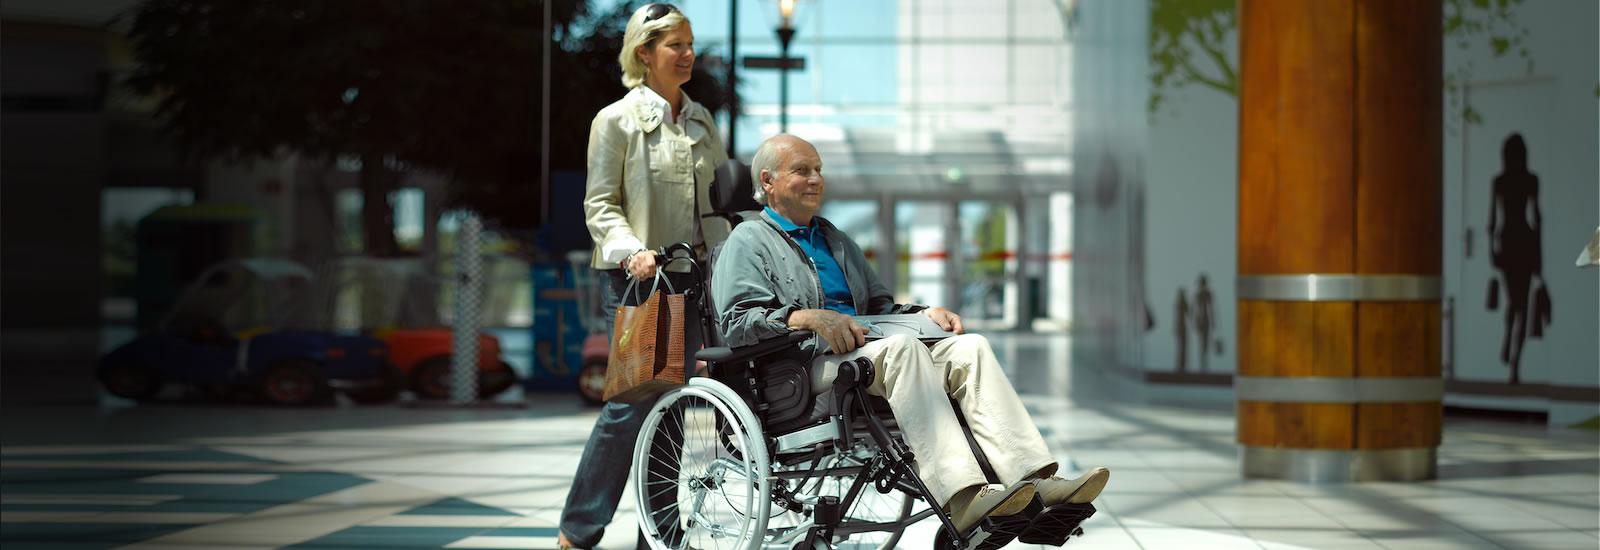 rea clematis fauteuil roulant mad medic a lit reunion vue illustrative